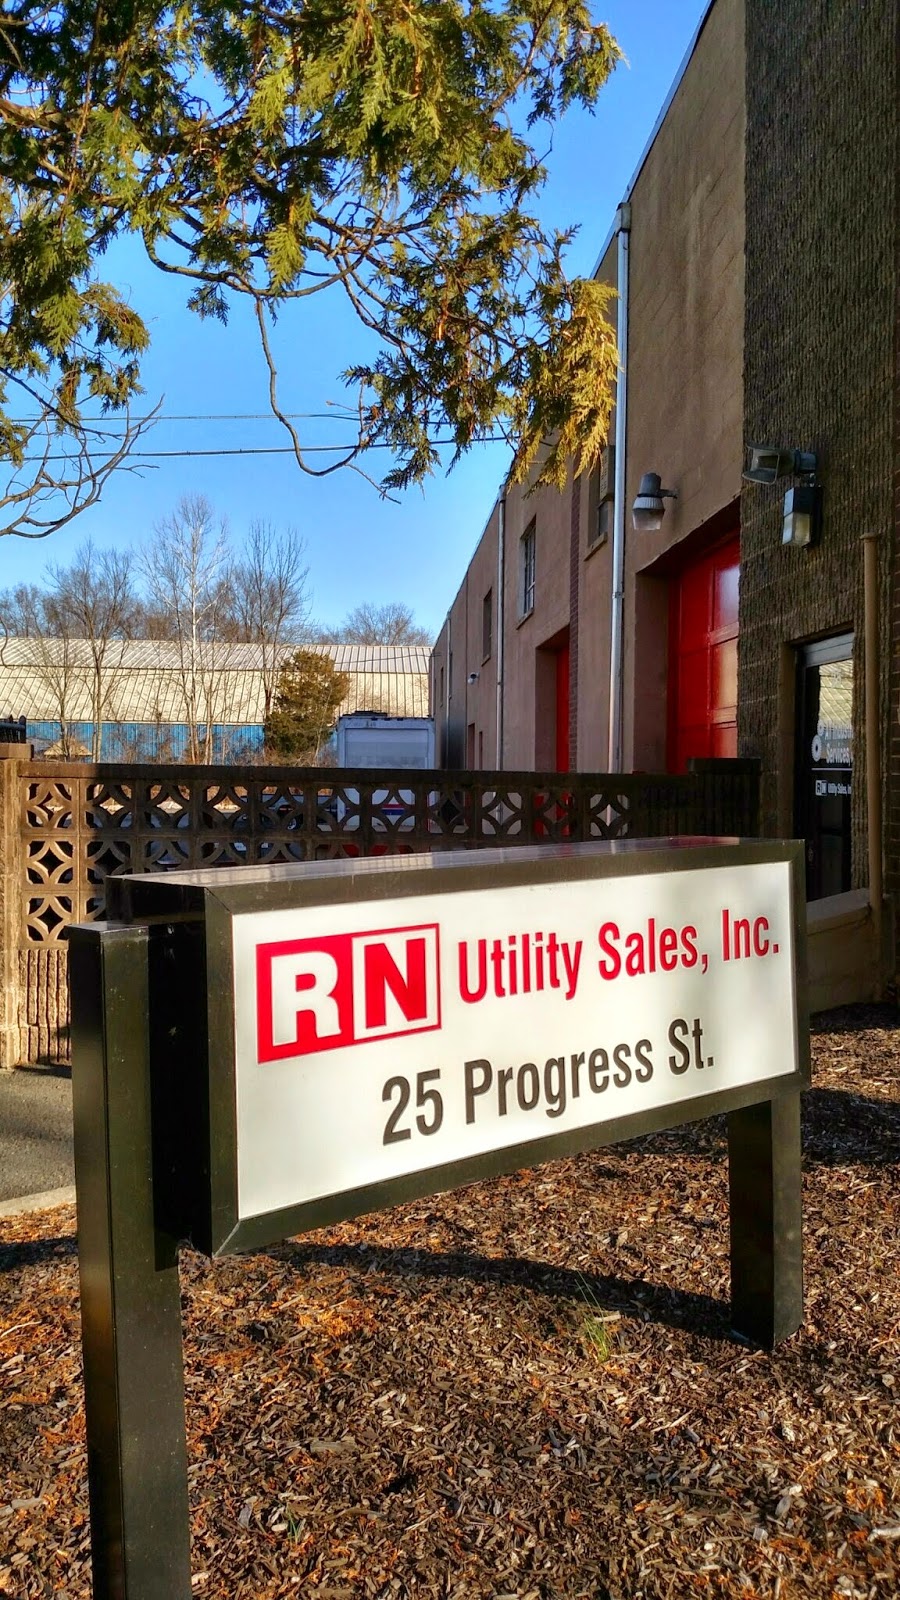 R N Utility Sales Inc | 25 Progress St #1, Edison, NJ 08820 | Phone: (908) 561-4028